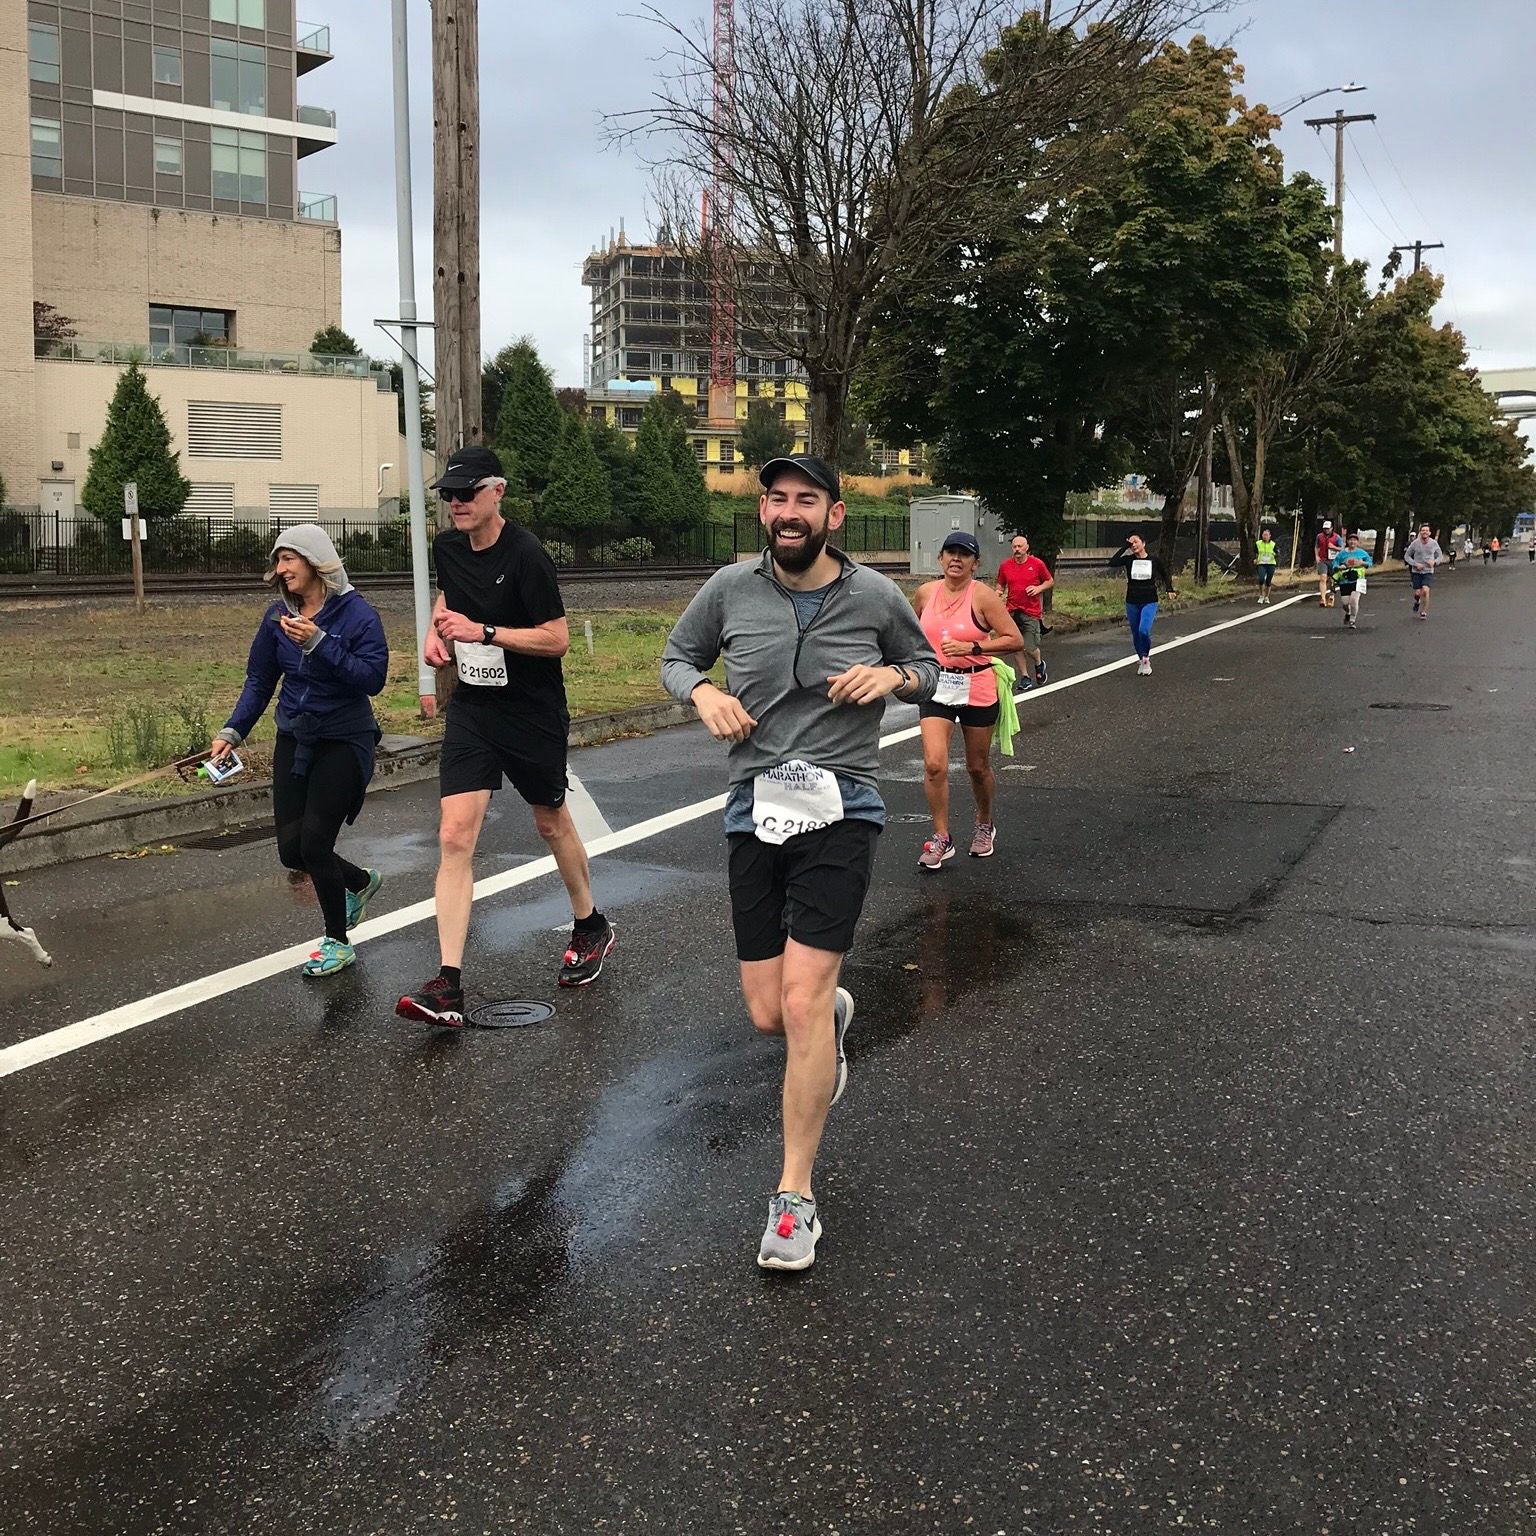 The author running in a half marathon event at the Portland Marathon in 2017.